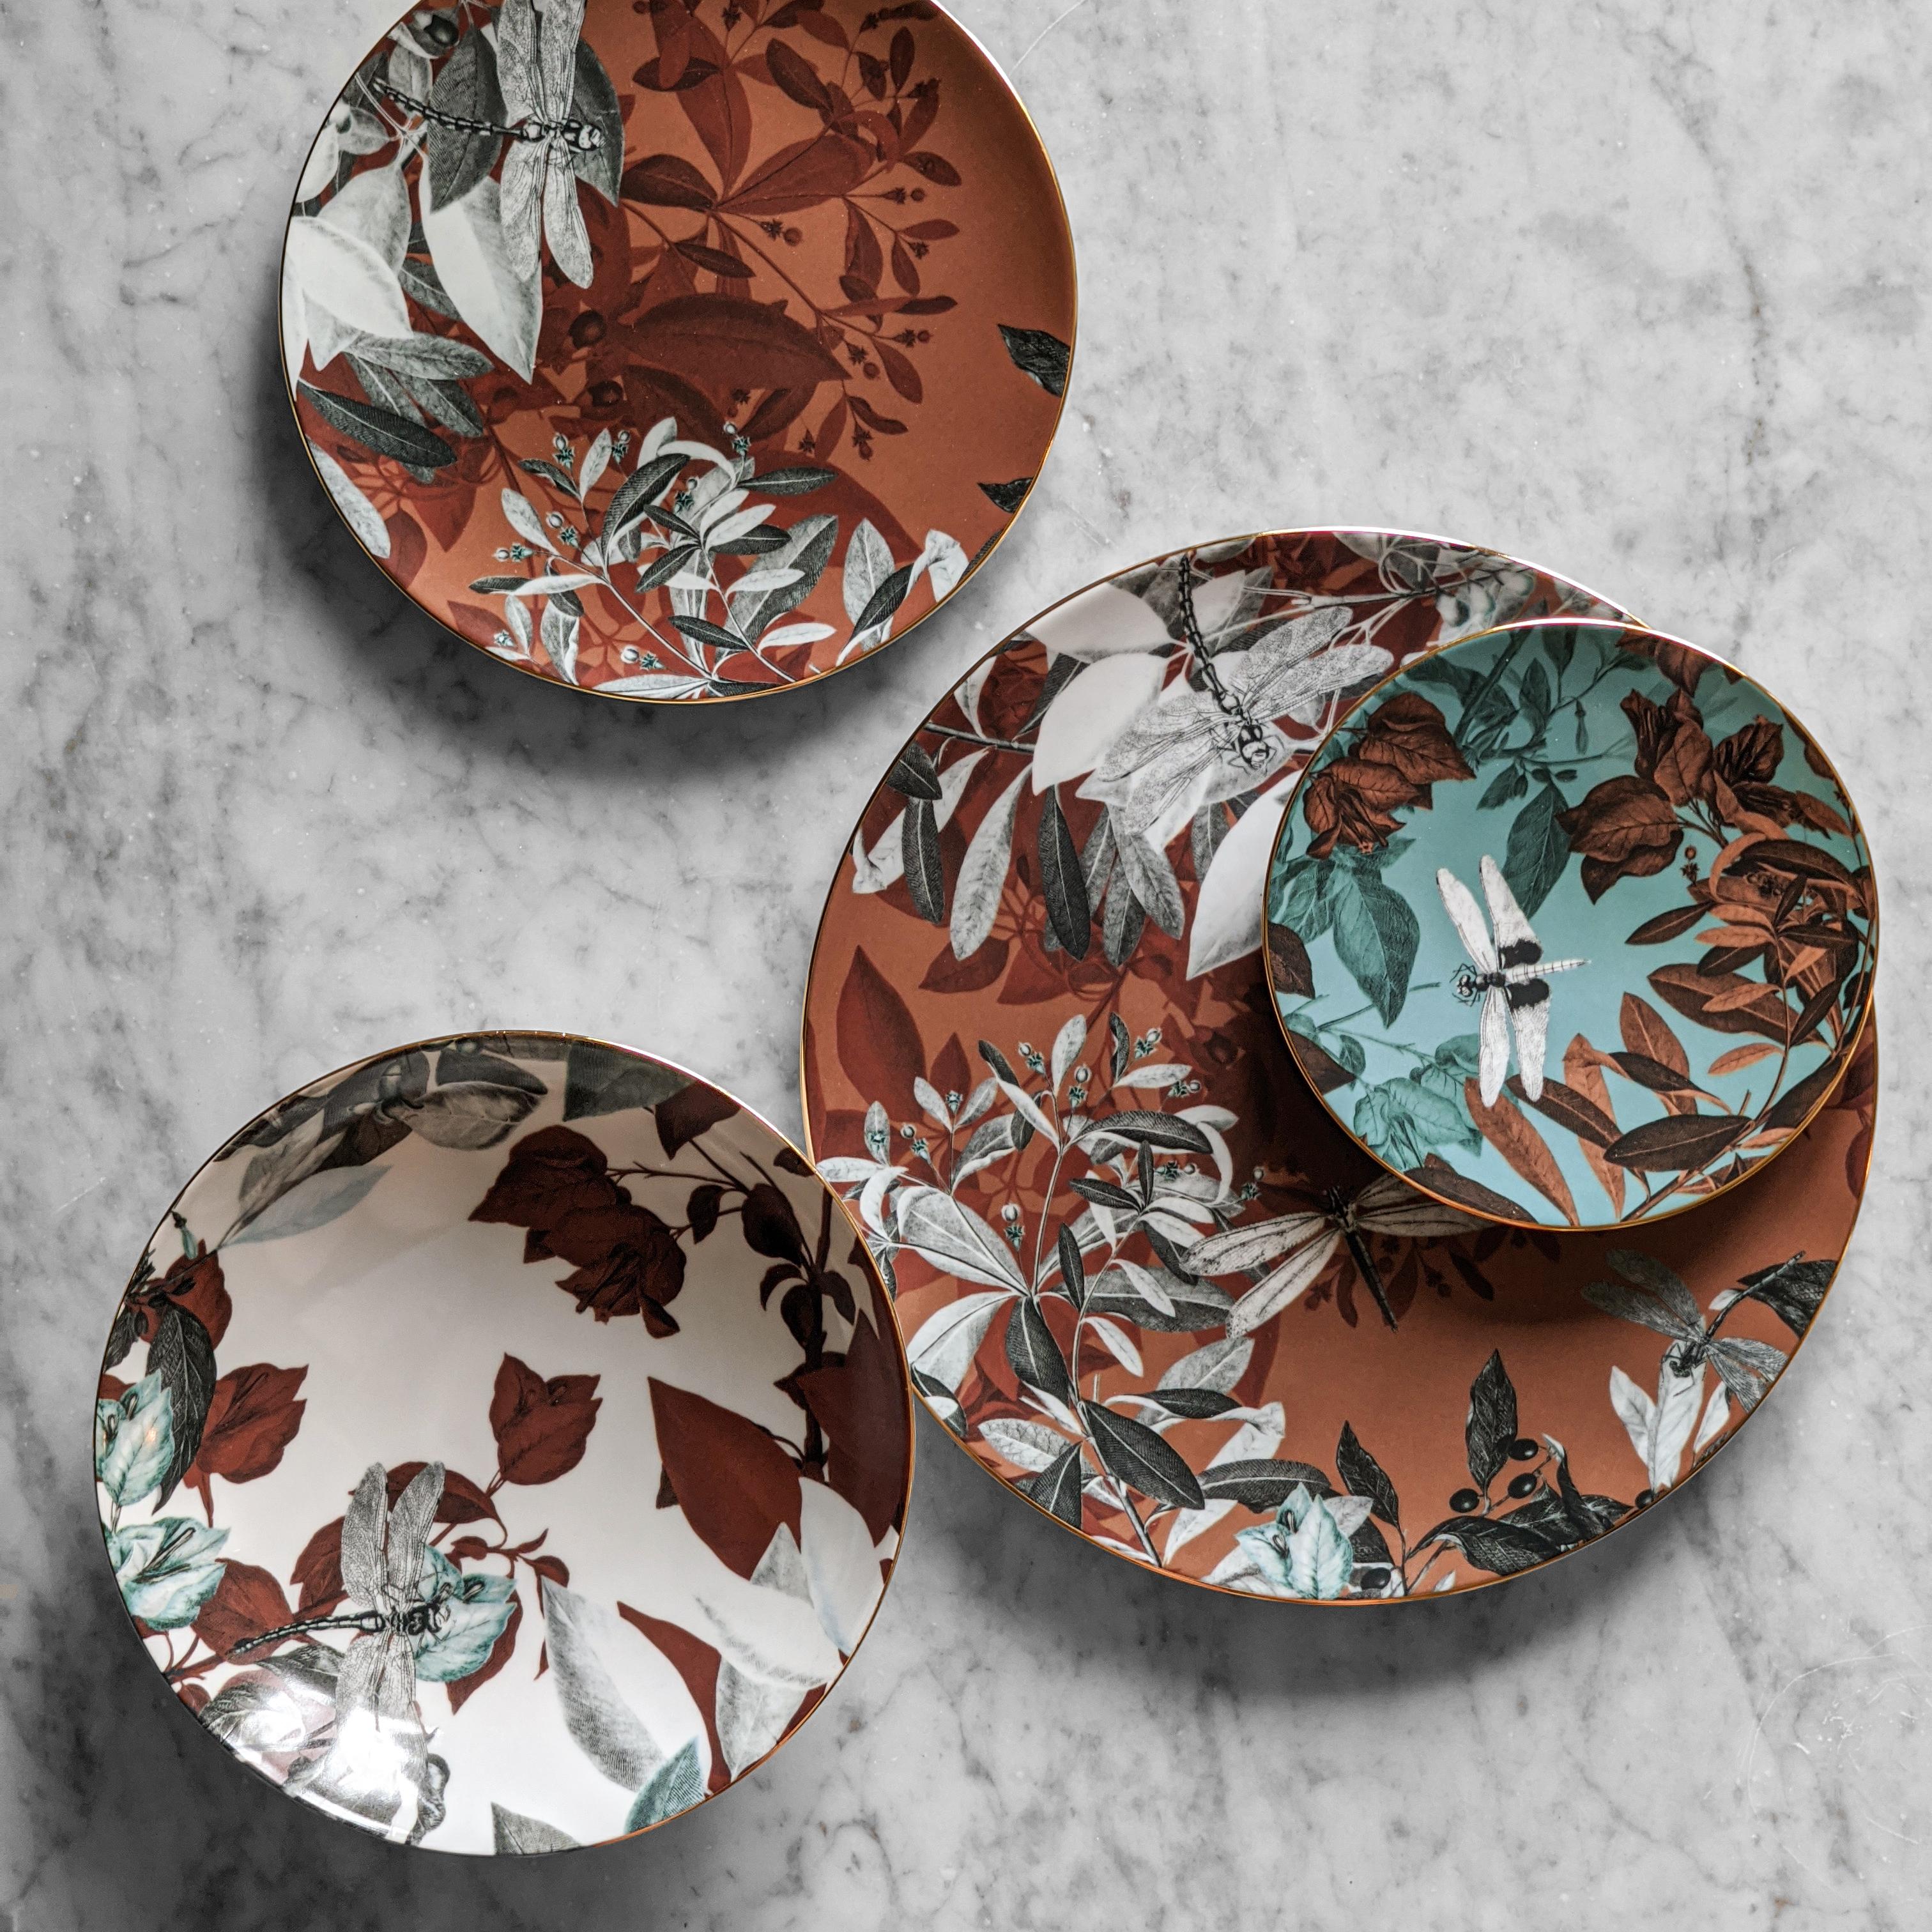 Black Dragon, Six Contemporary Porcelain Dessert Plates with Decorative Design For Sale 5